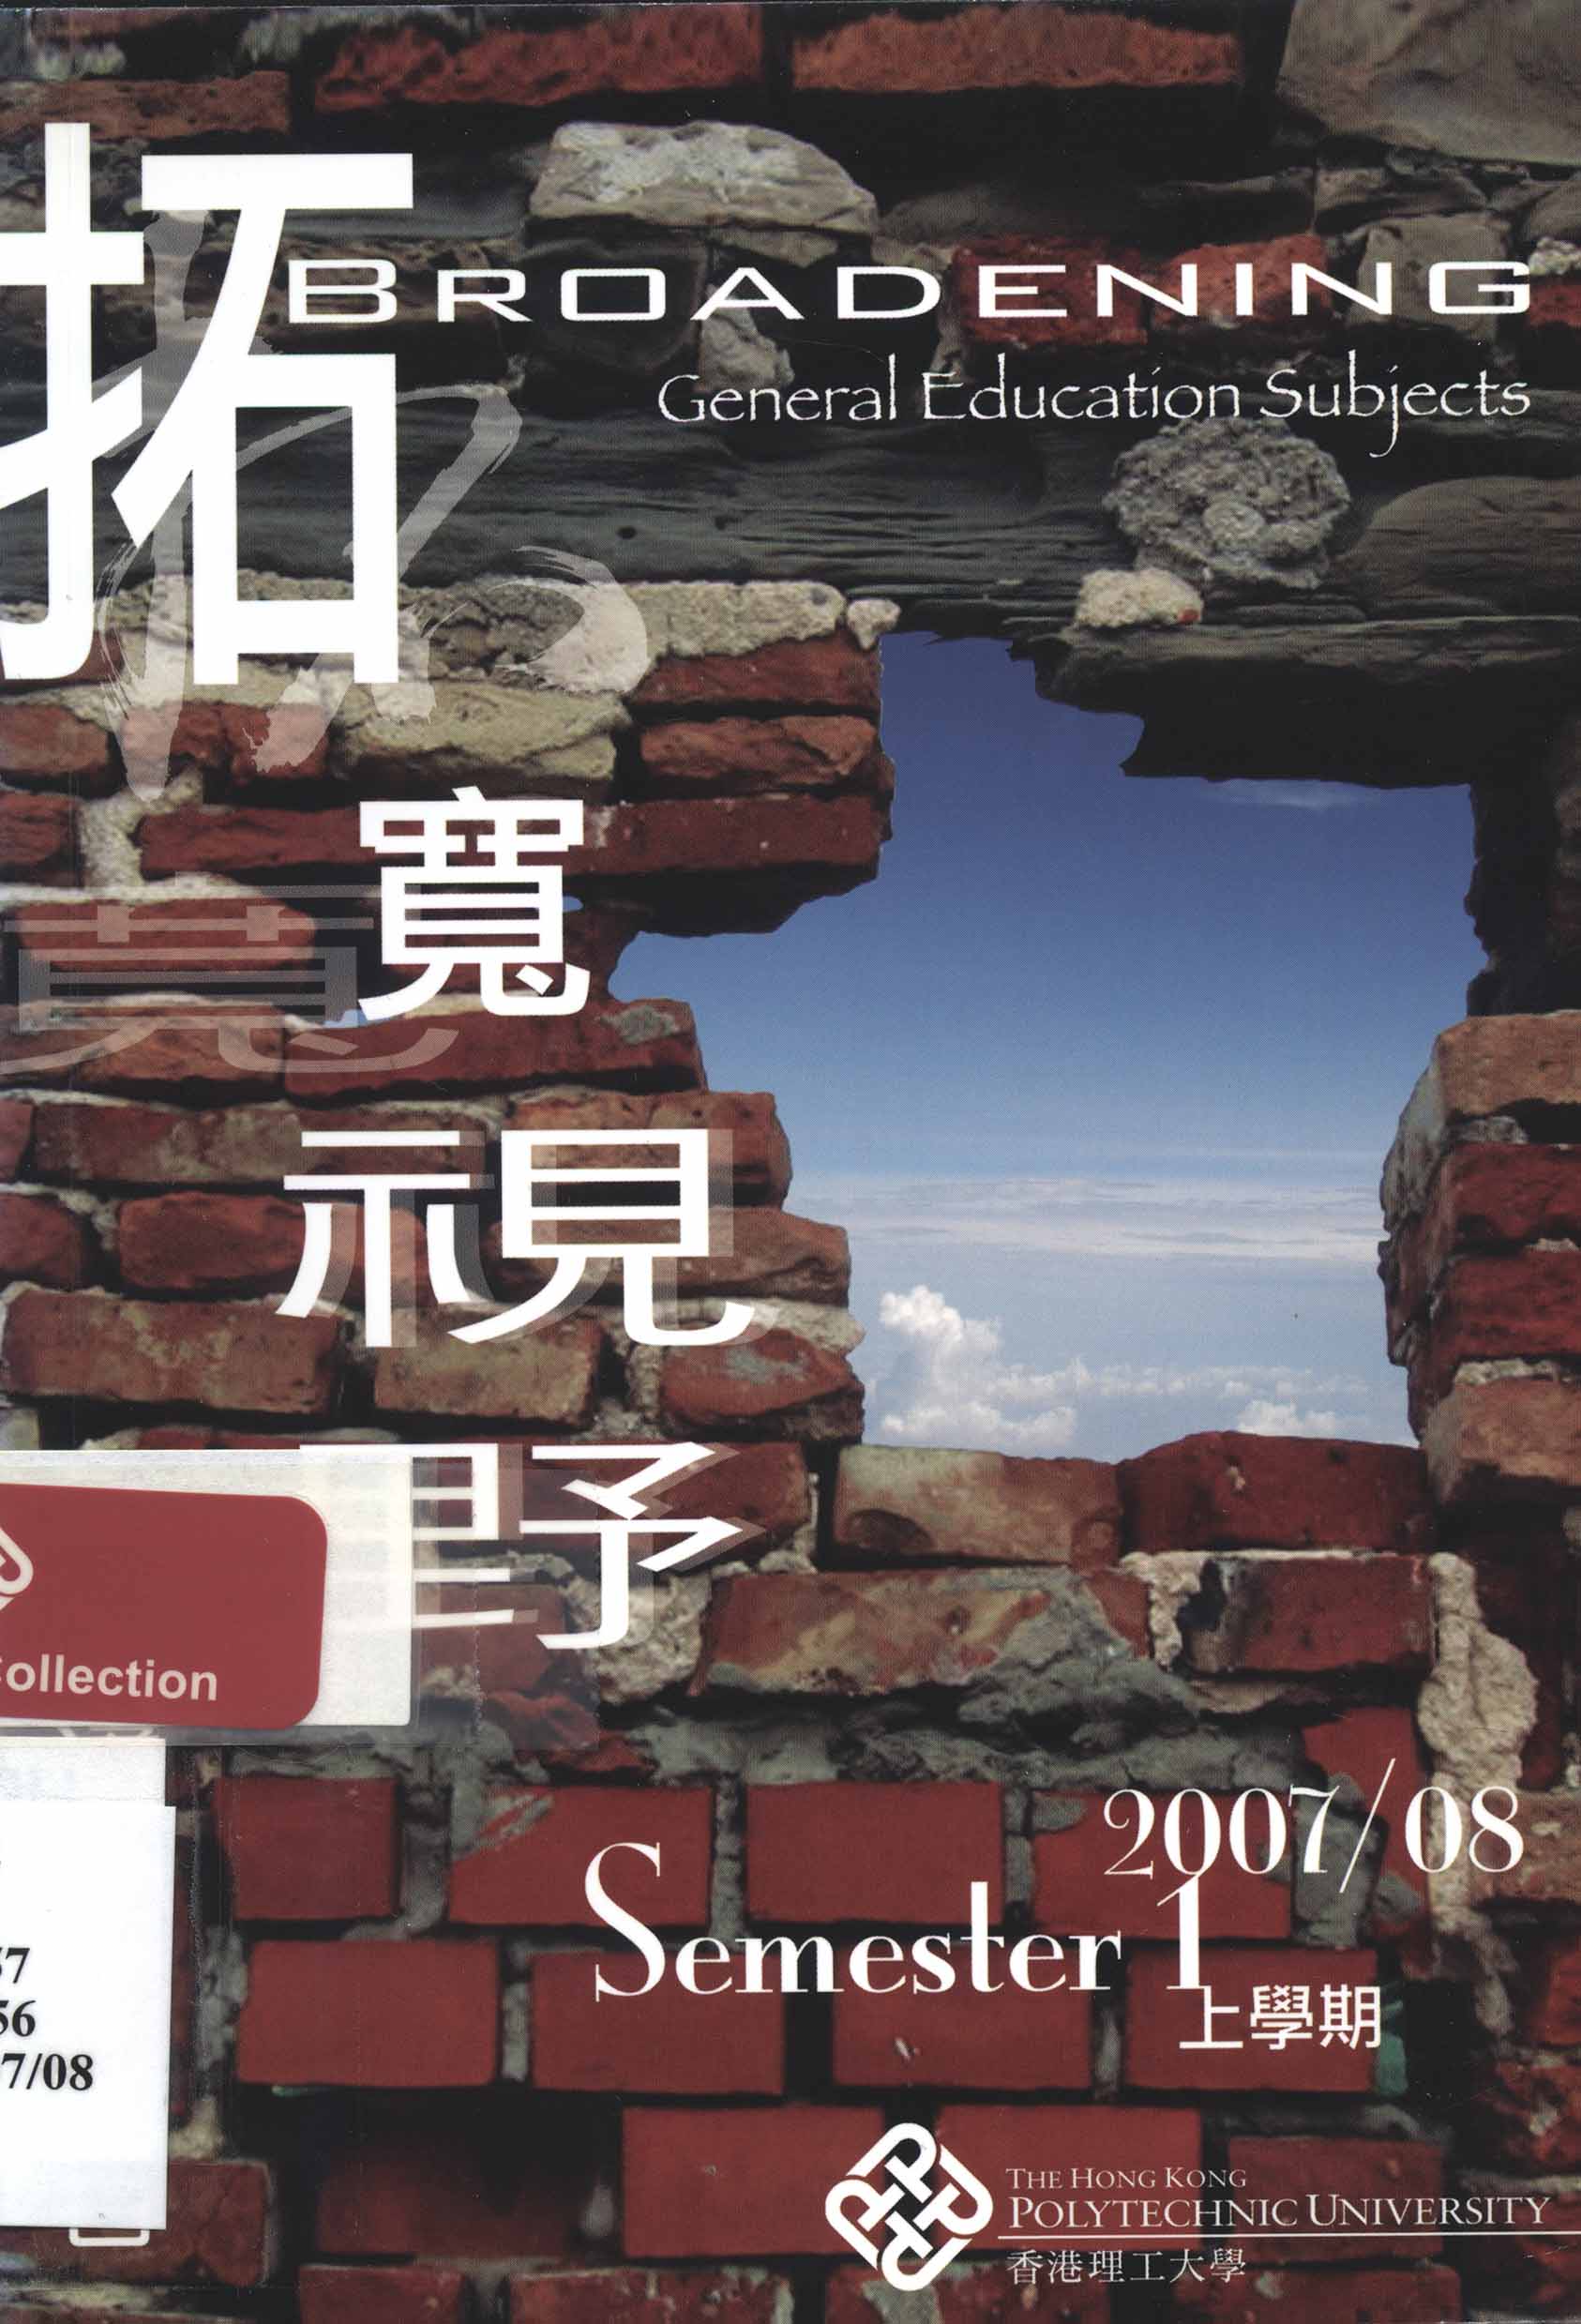 Broadening general education subjects [Semester 1 of 2007/08]